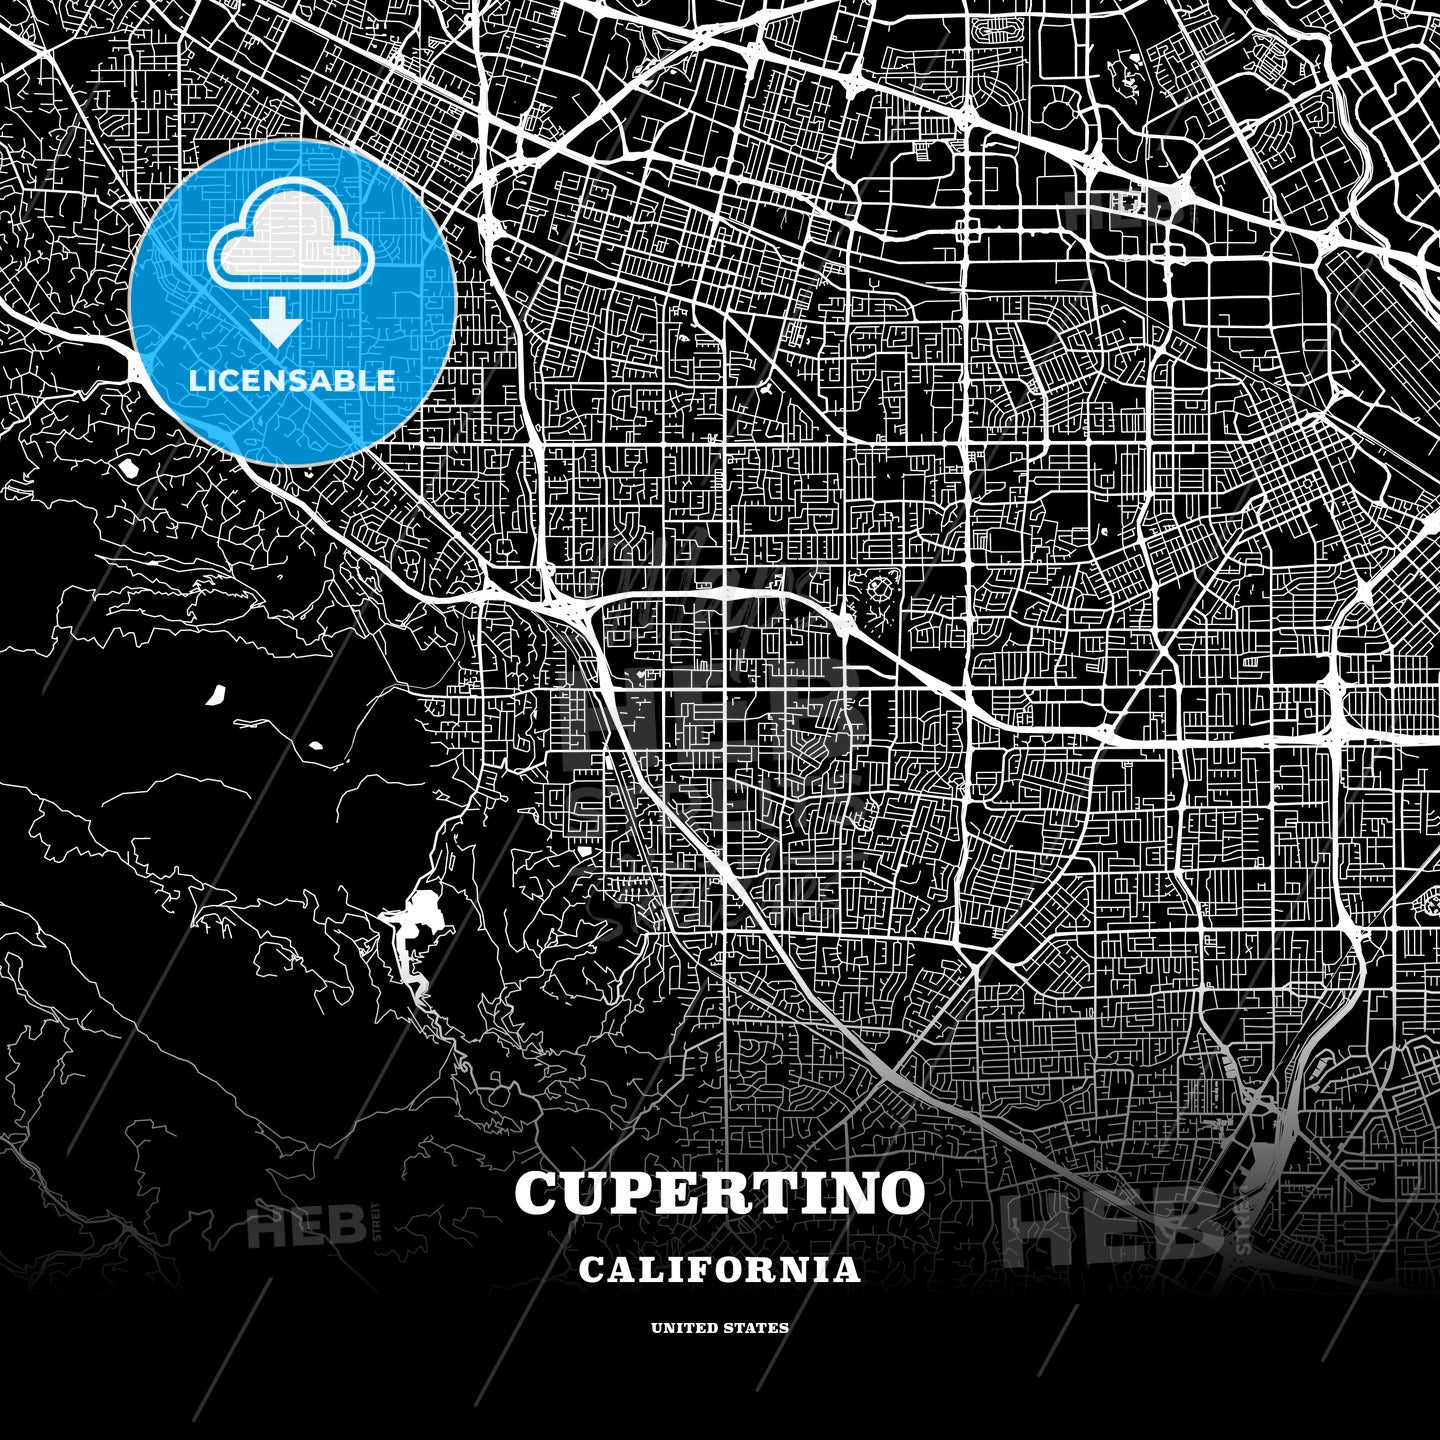 Cupertino, California, USA map